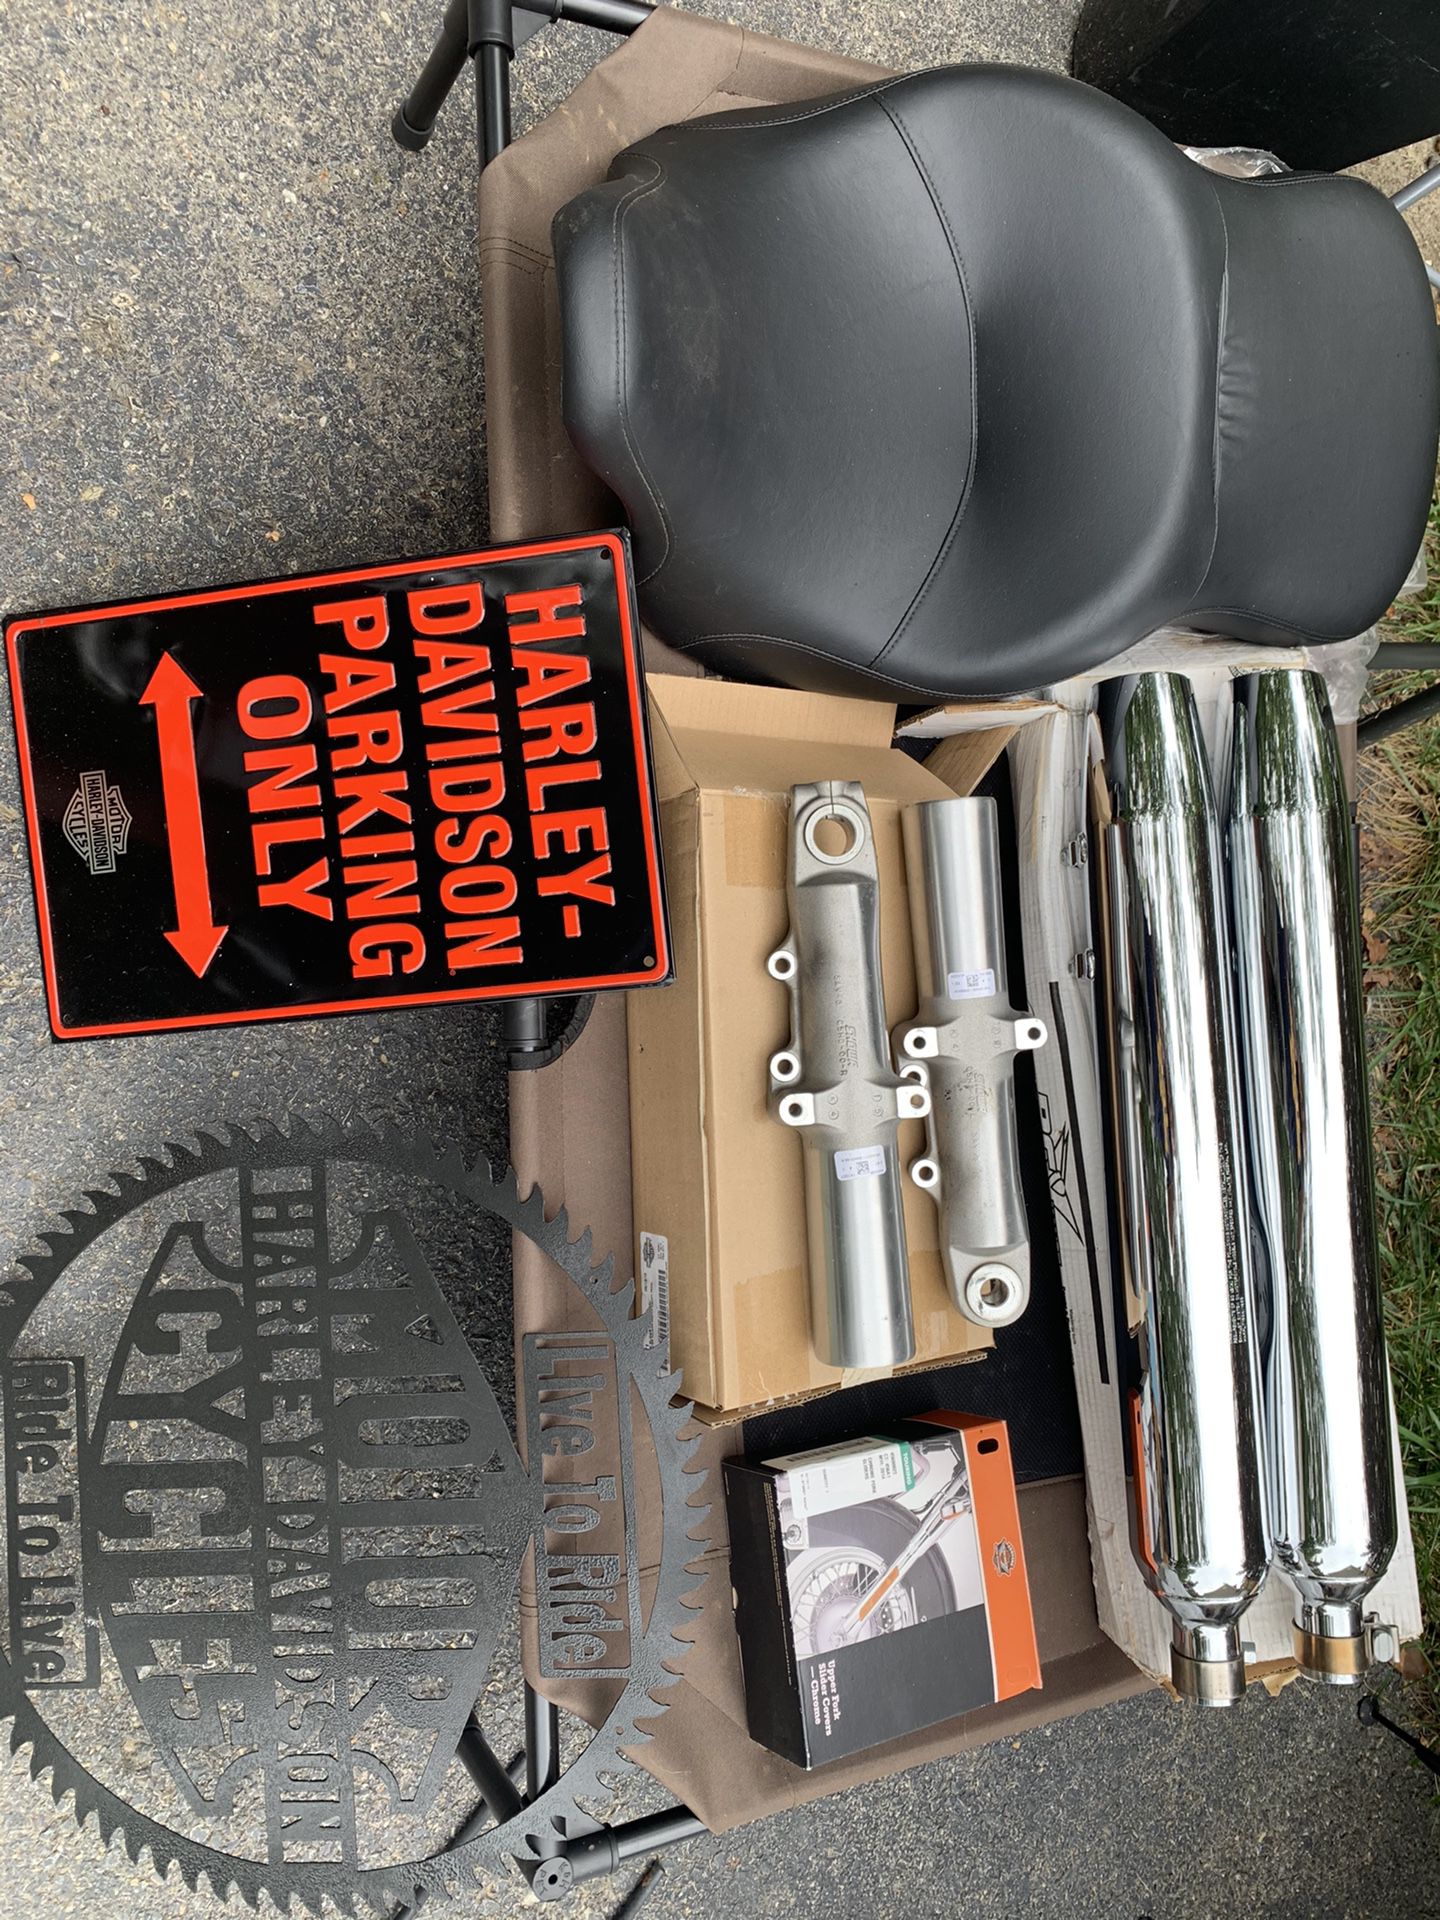 Original Harley Davidson parts